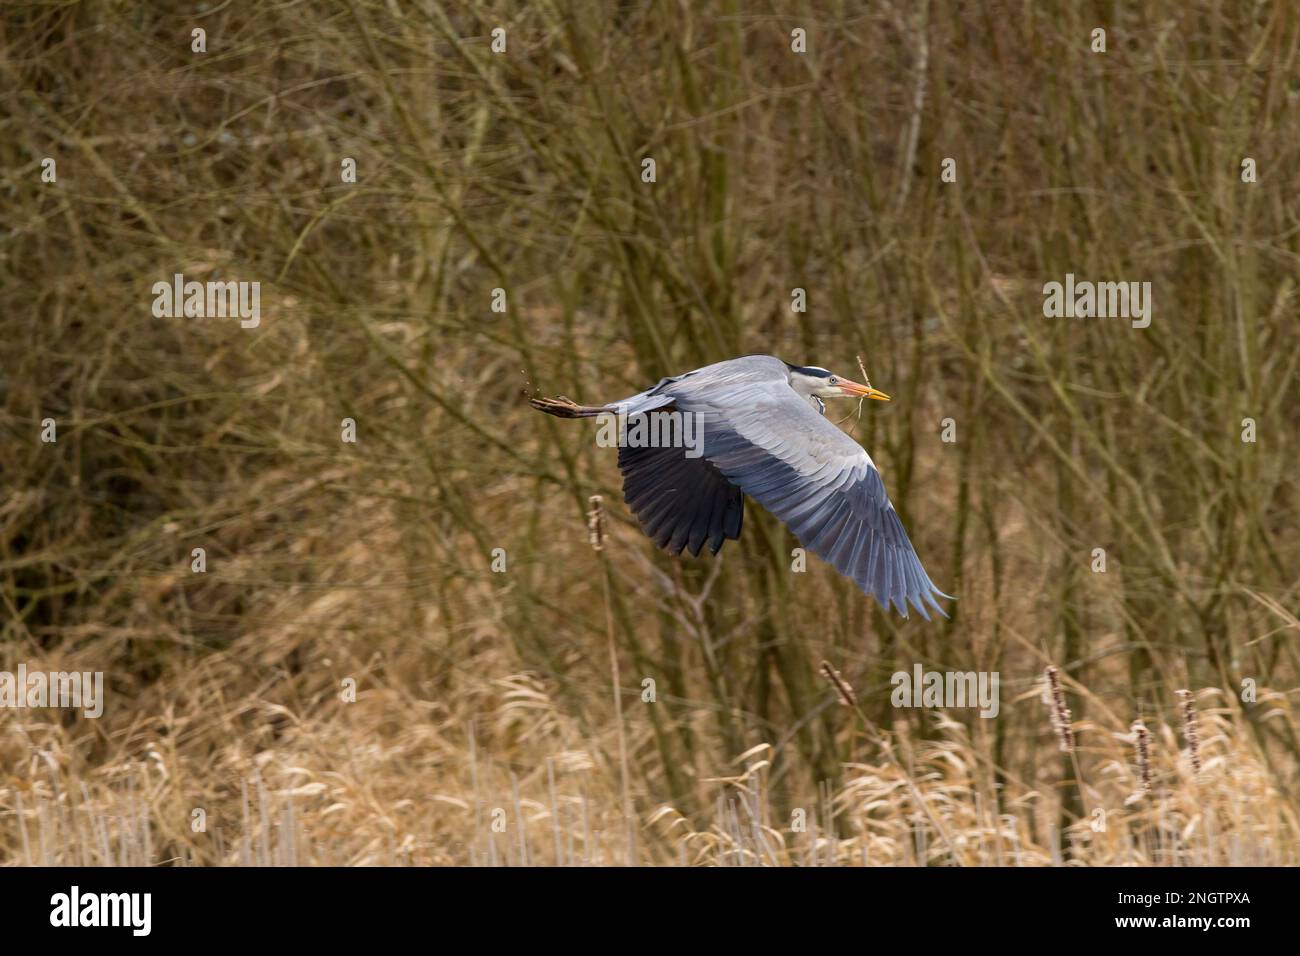 Heron grey Ardea cinerea, large blue grey wading bird in flight long yellow dagger like bill black flight feathers long neck and legs black crest Stock Photo